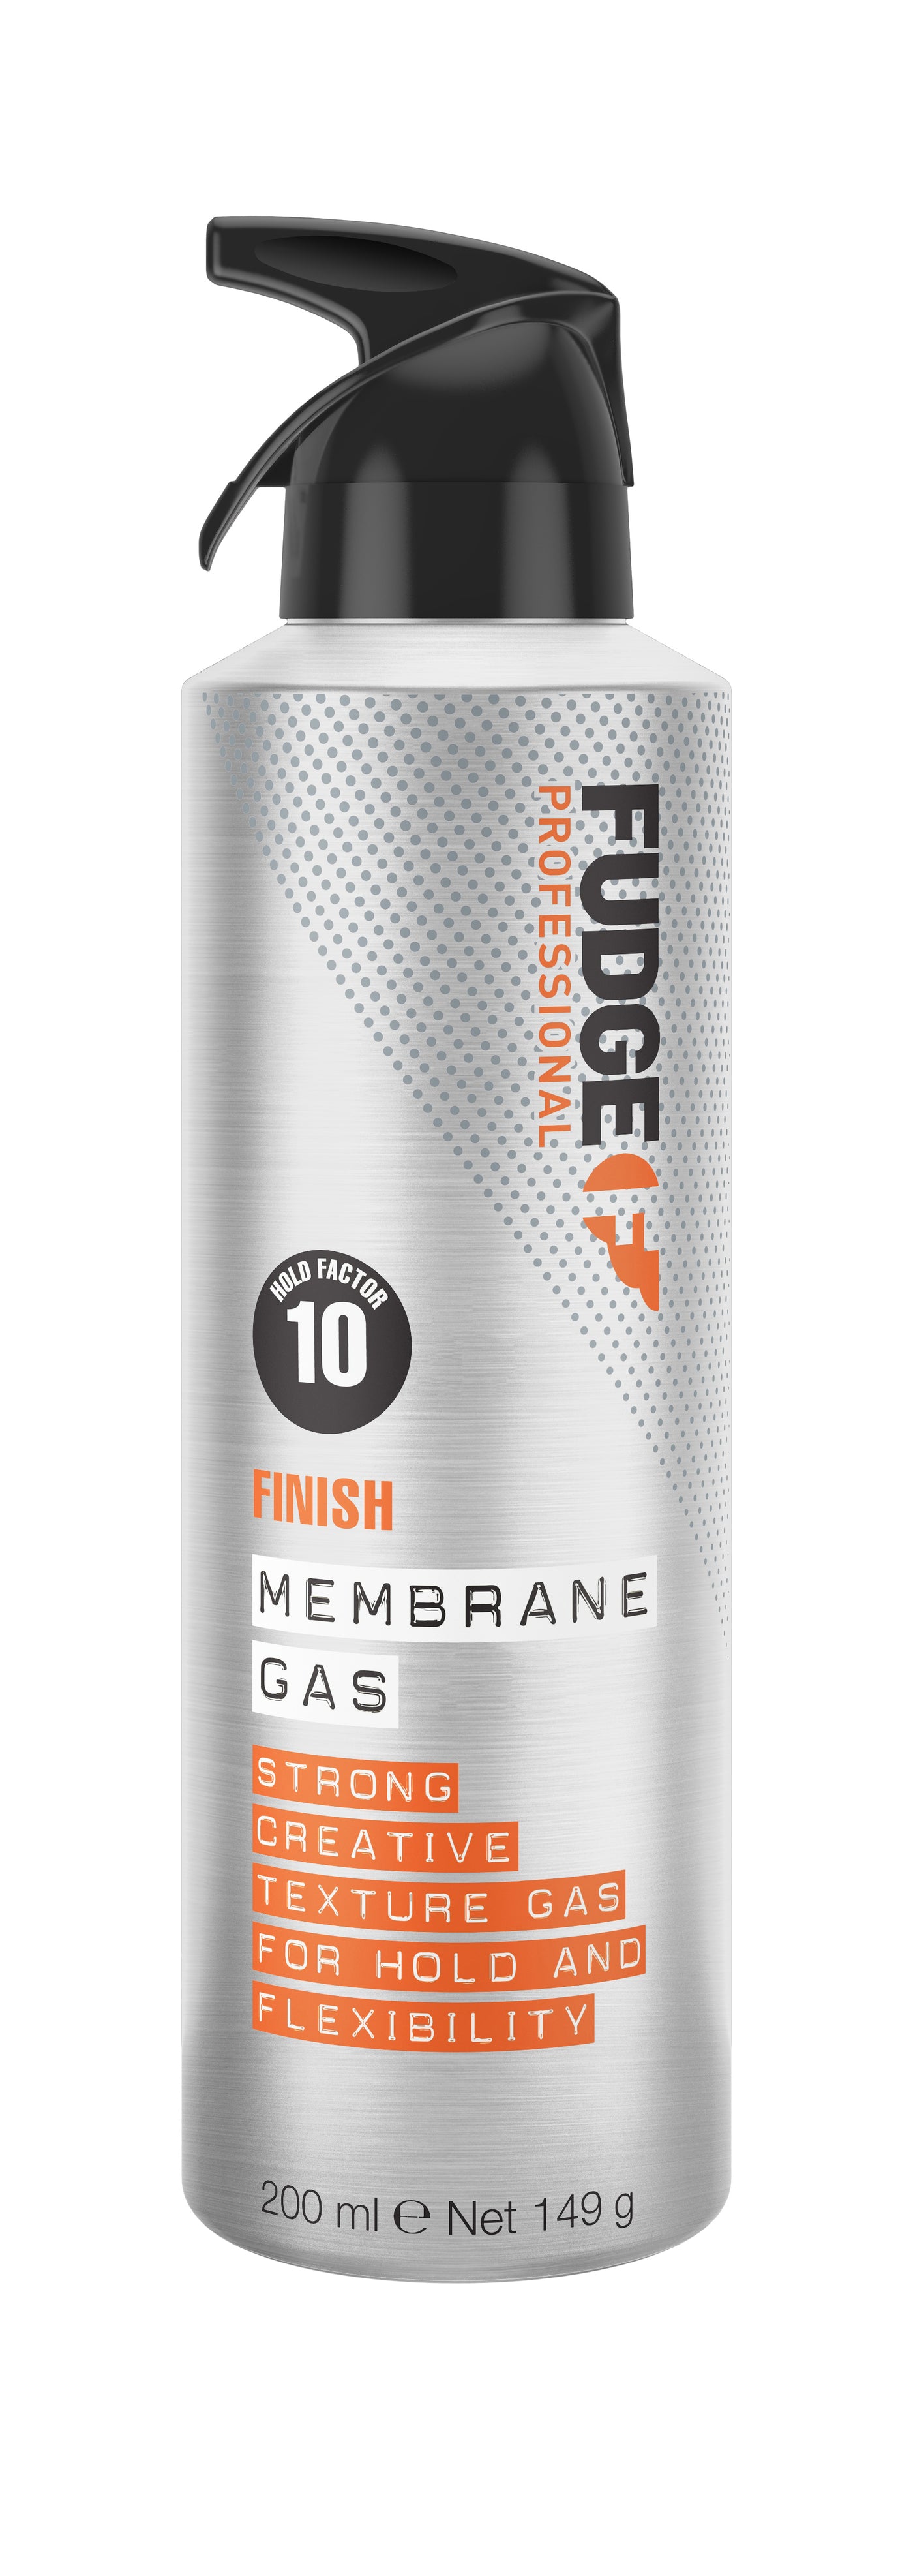 FUDGE MEMBRANE GAS Strong Creative Texture Gas-Salon Warehouse